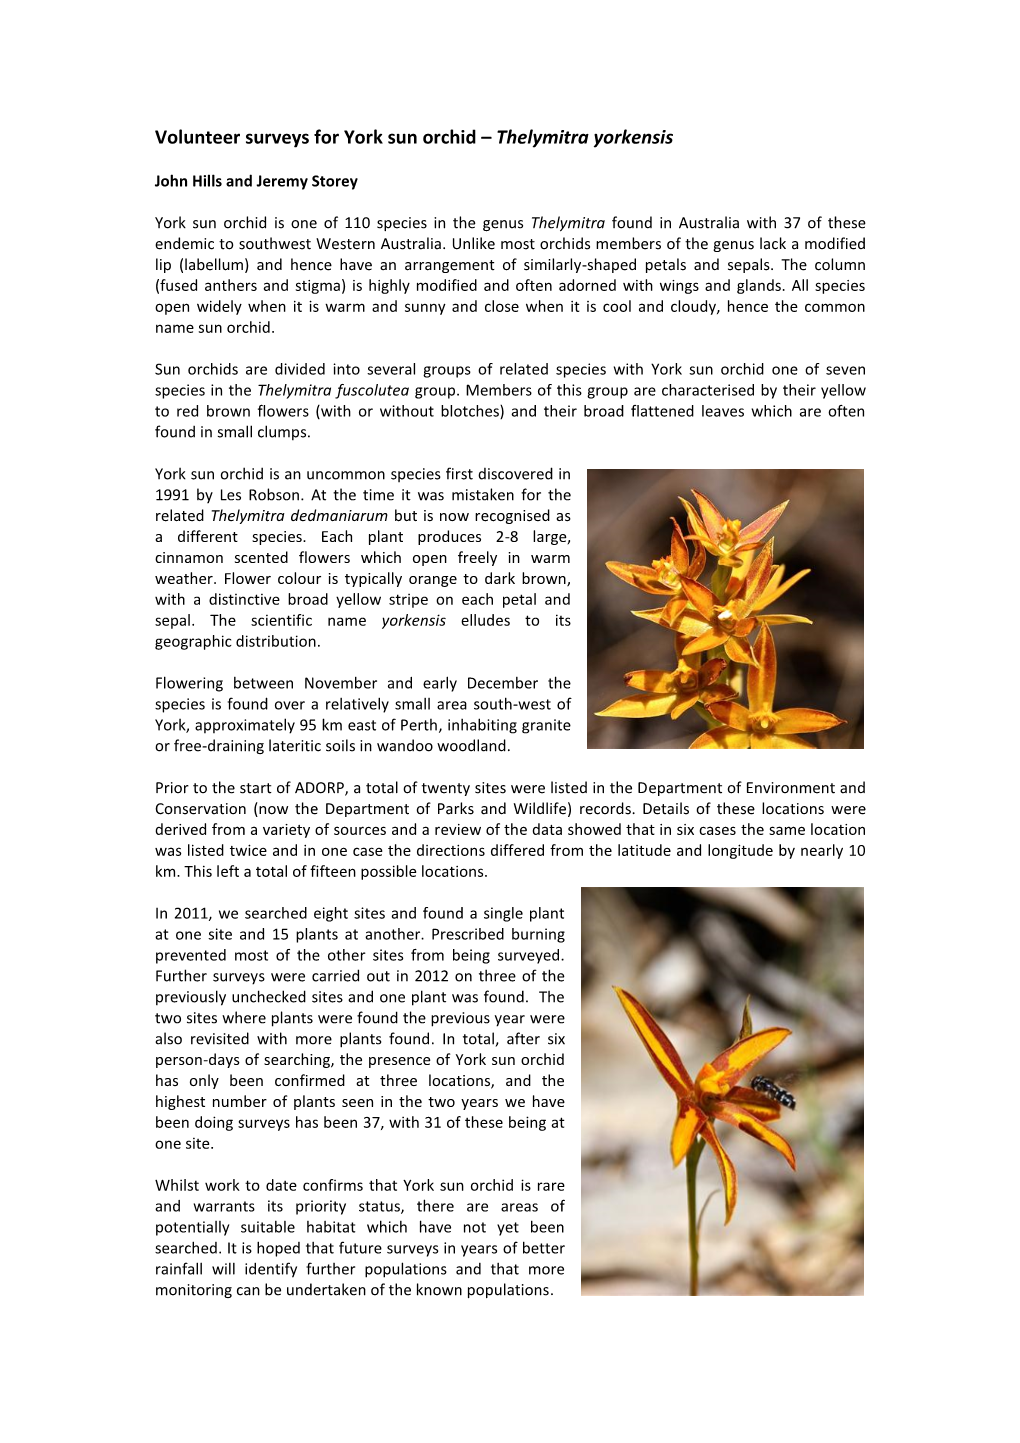 Volunteer Surveys for York Sun Orchid – Thelymitra Yorkensis